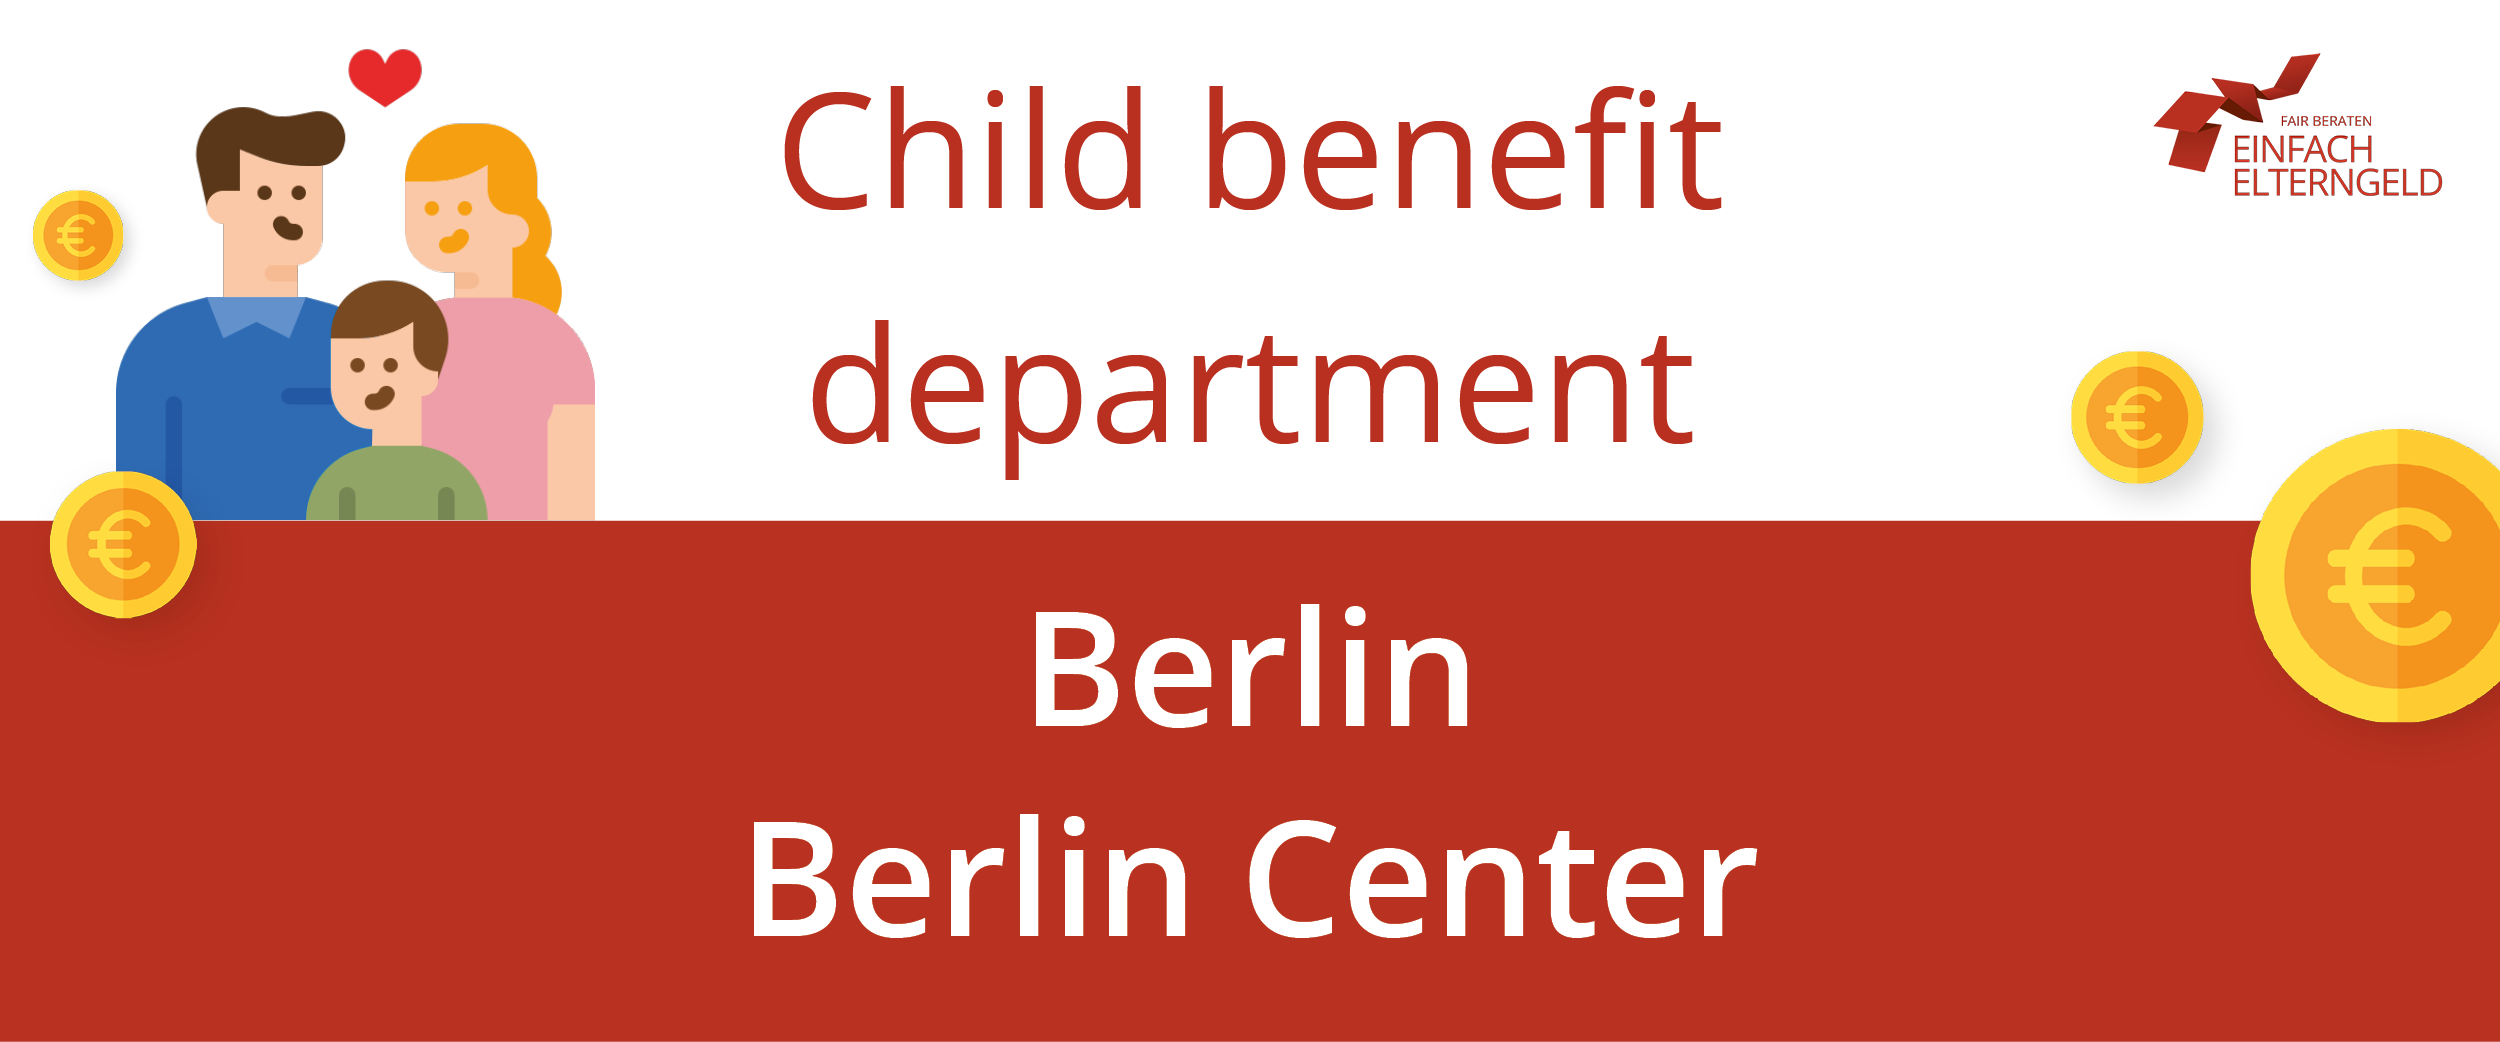 We present you the Child benefit department Berlin Berlin Center.